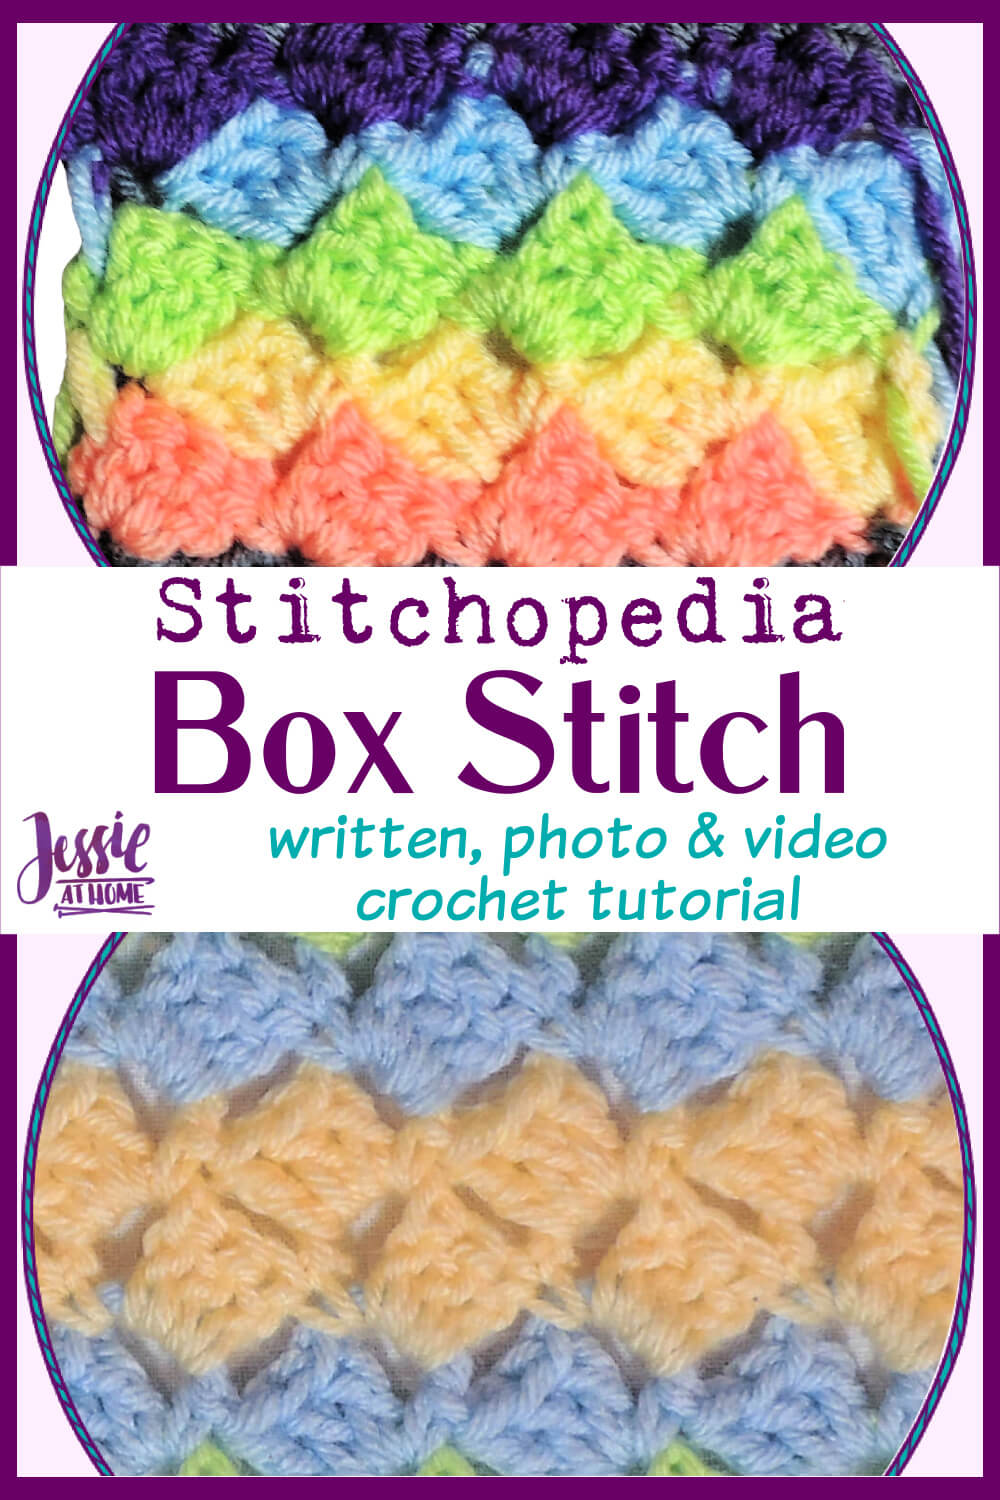 Box Stitch – written, photo, and video crochet tutorial